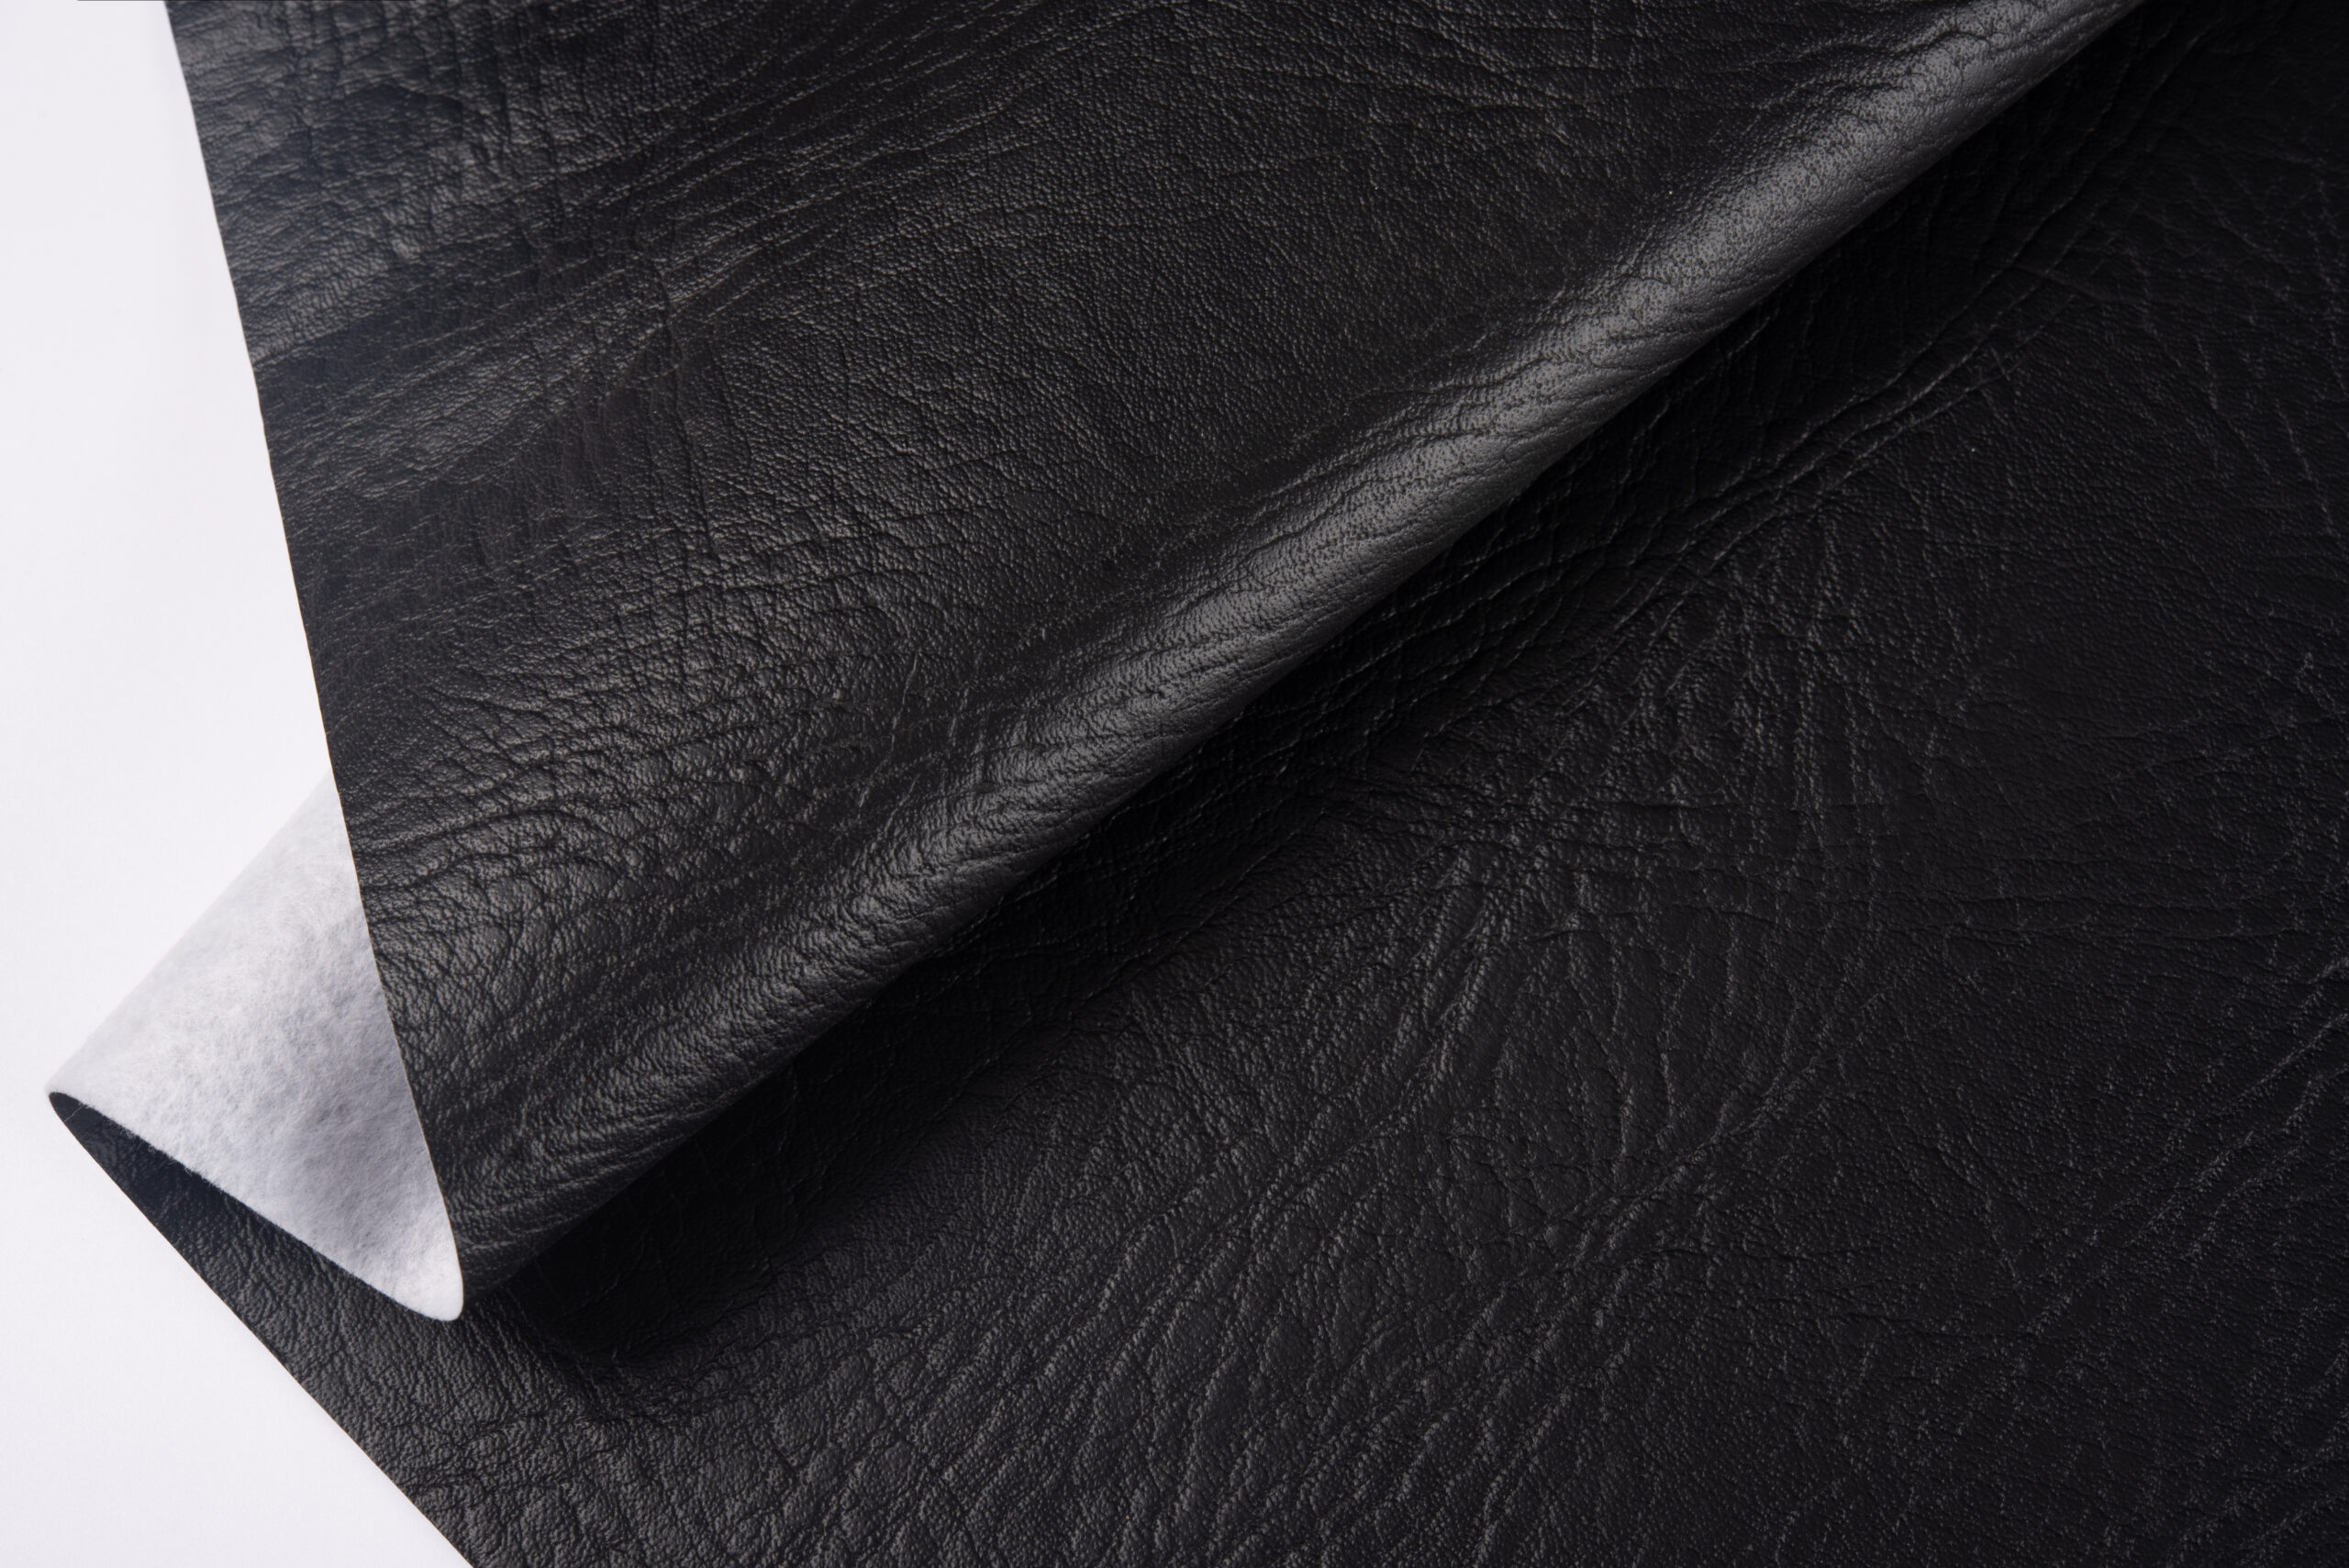 leatherette fabric